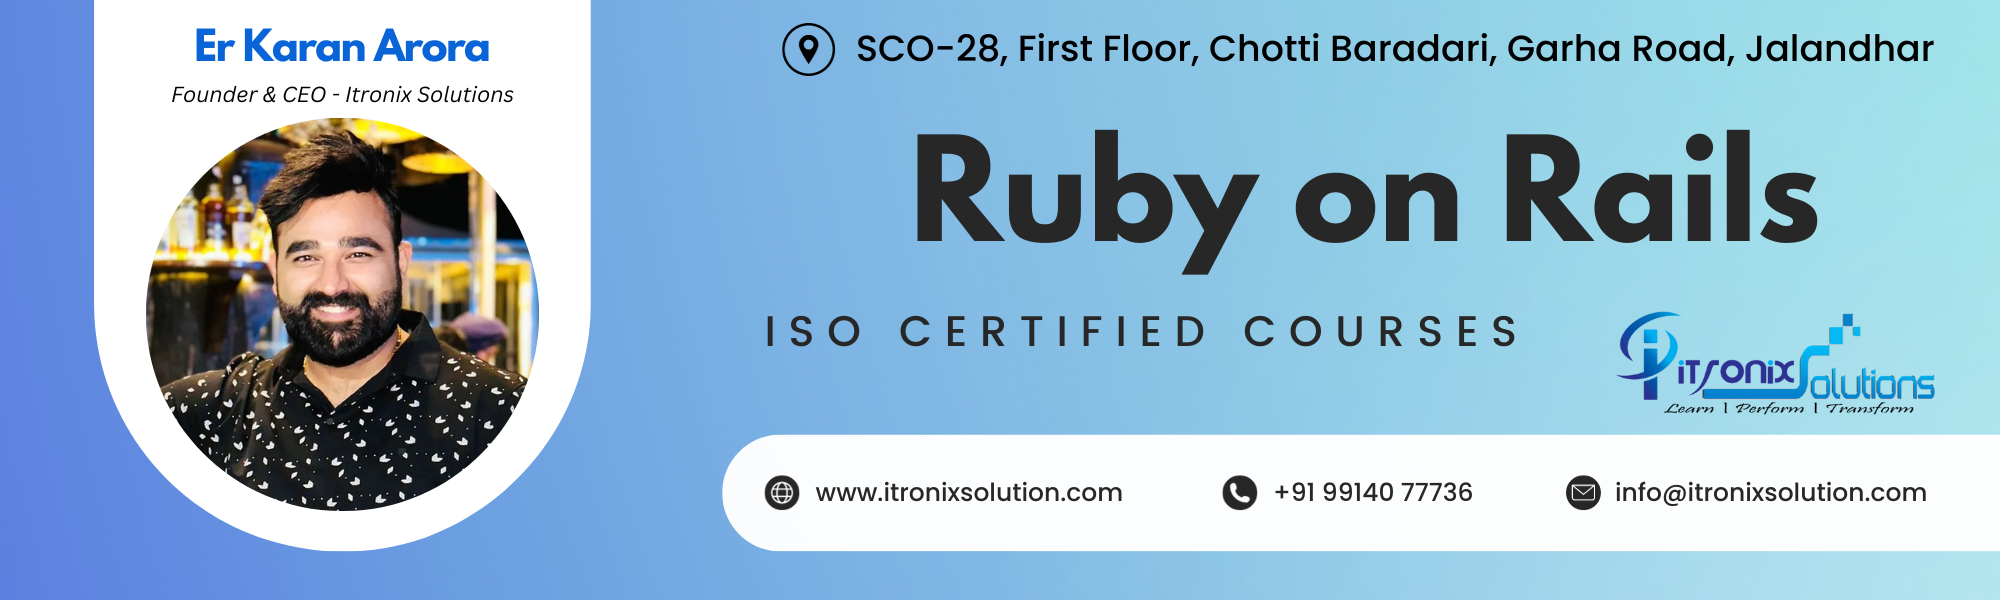 Best Ruby on Rails Course Training in Jalandhar